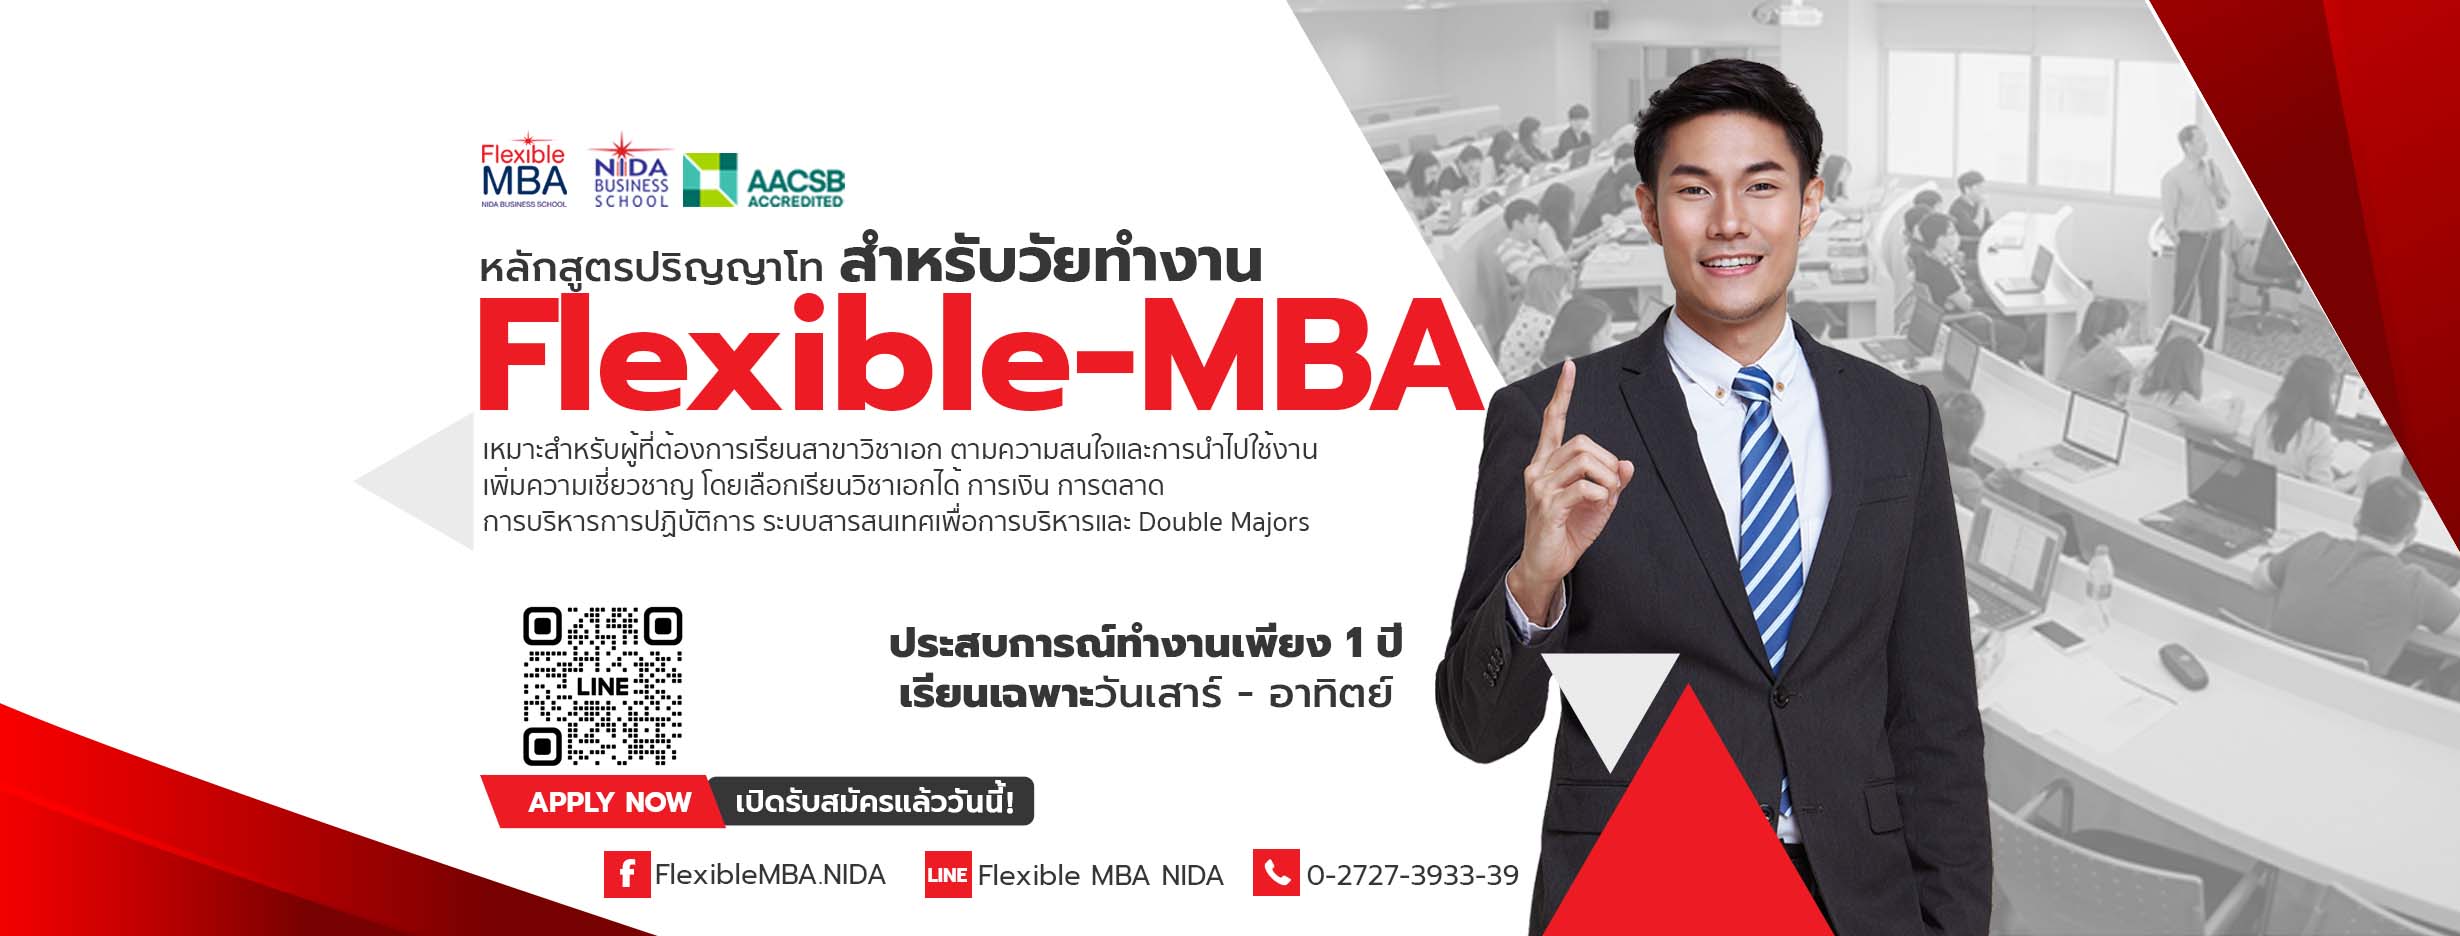 Flexible MBA